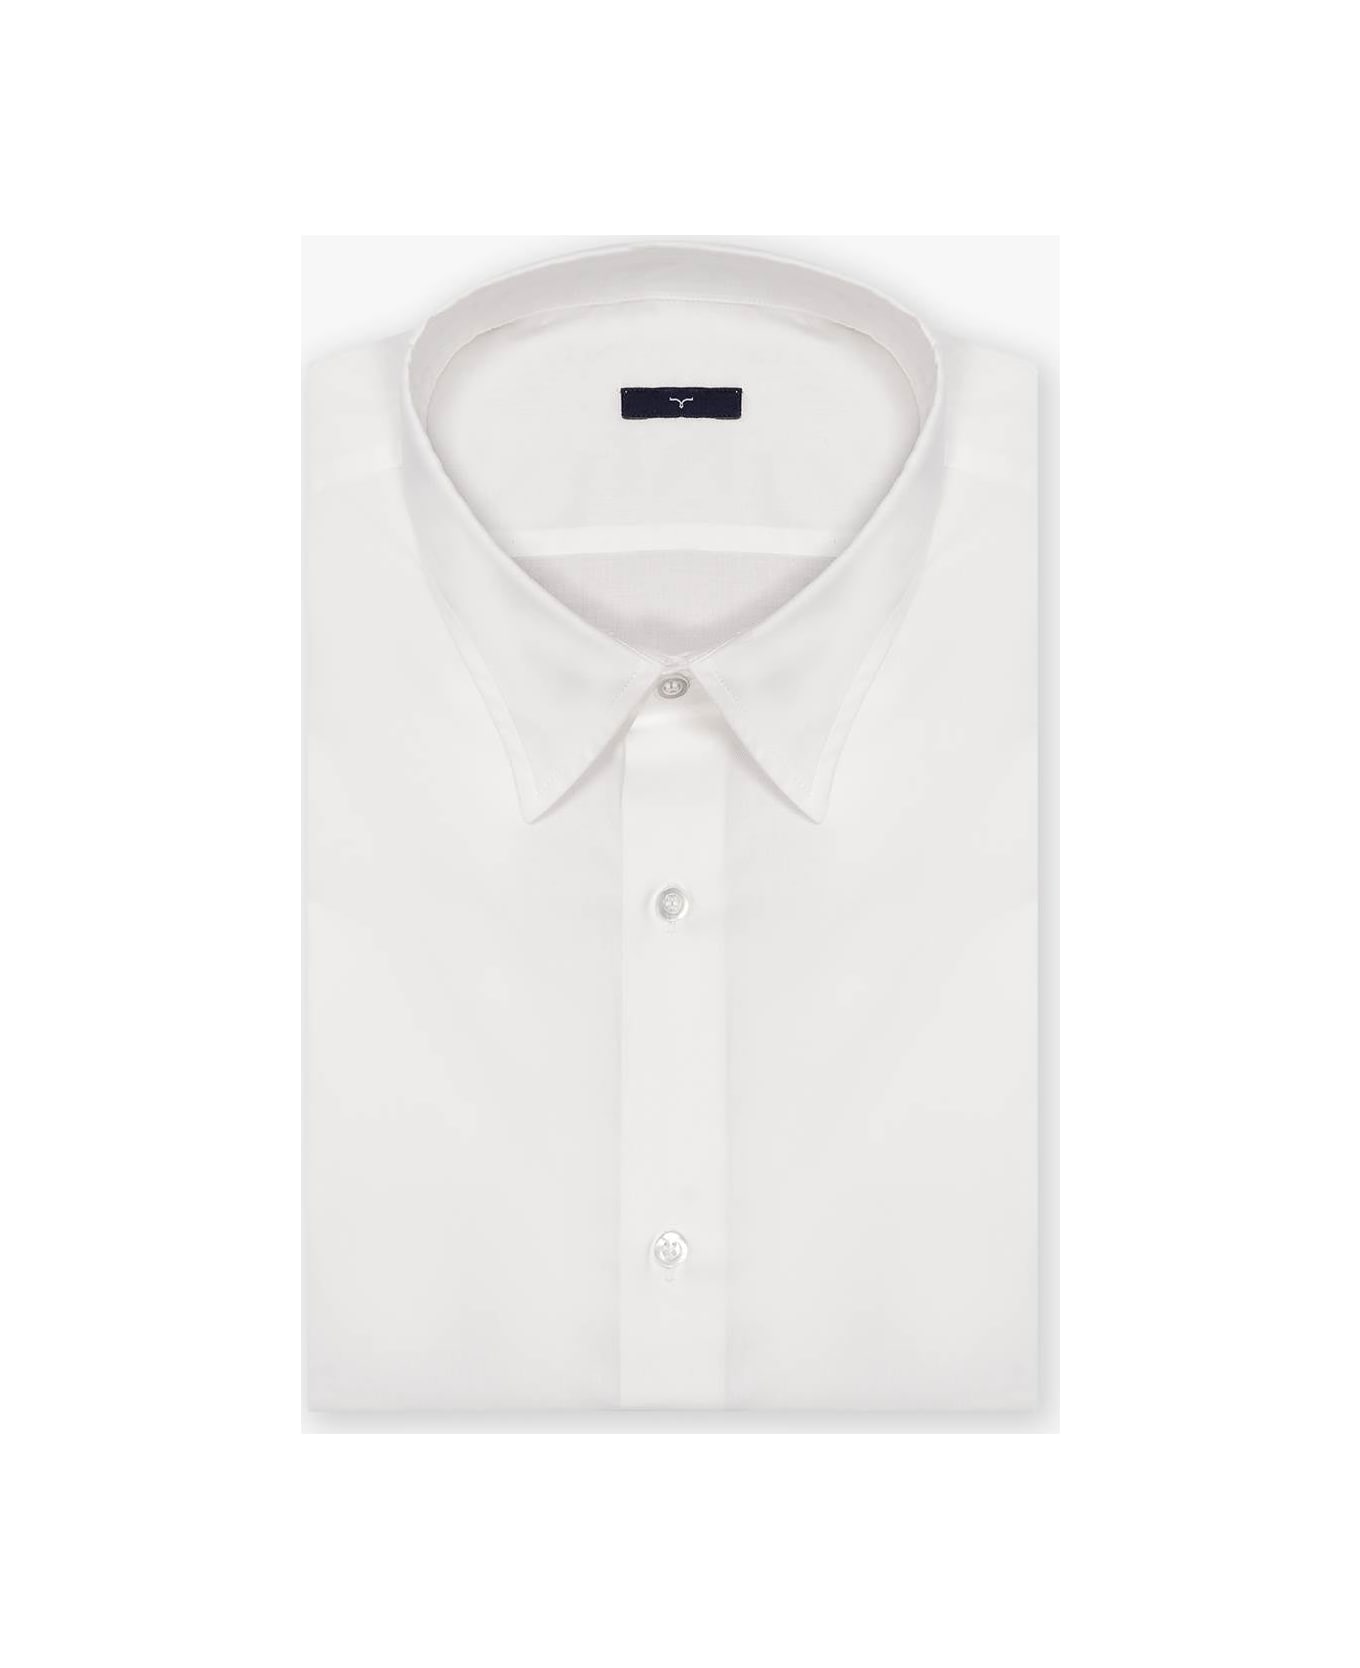 Larusmiani Leisure Shirt Shirt - White